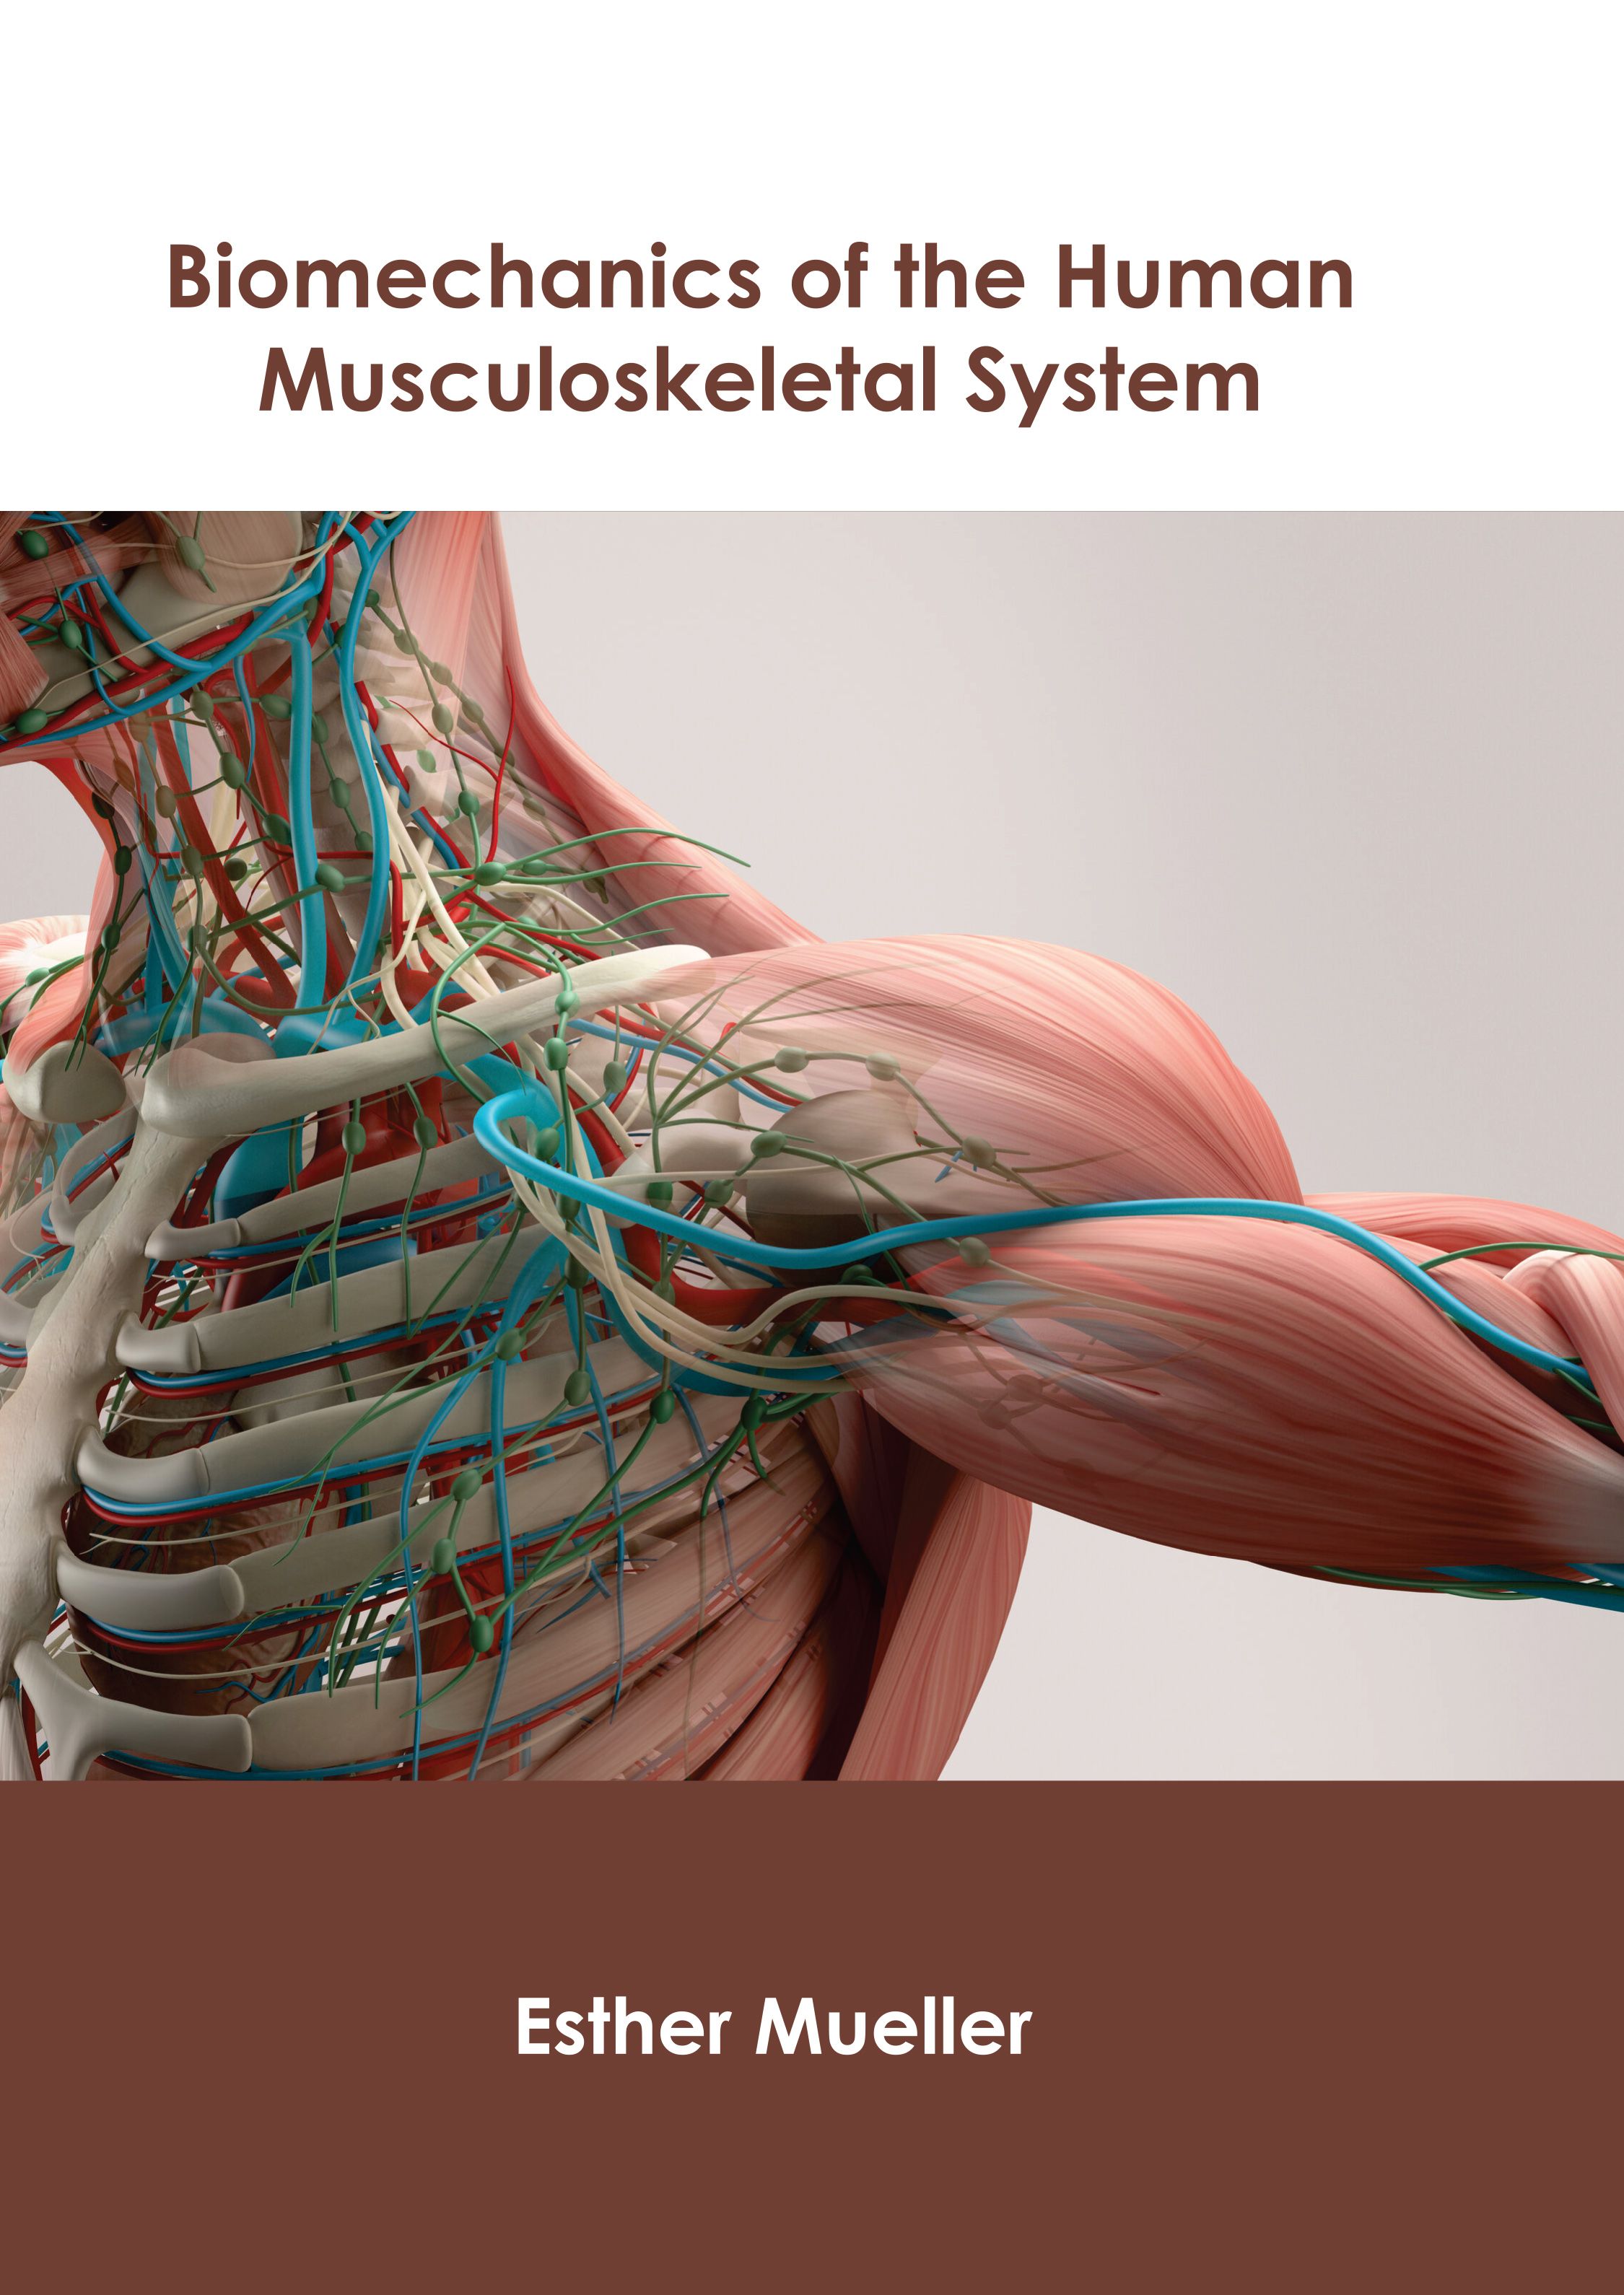 BIOMECHANICS OF THE HUMAN MUSCULOSKELETAL SYSTEM